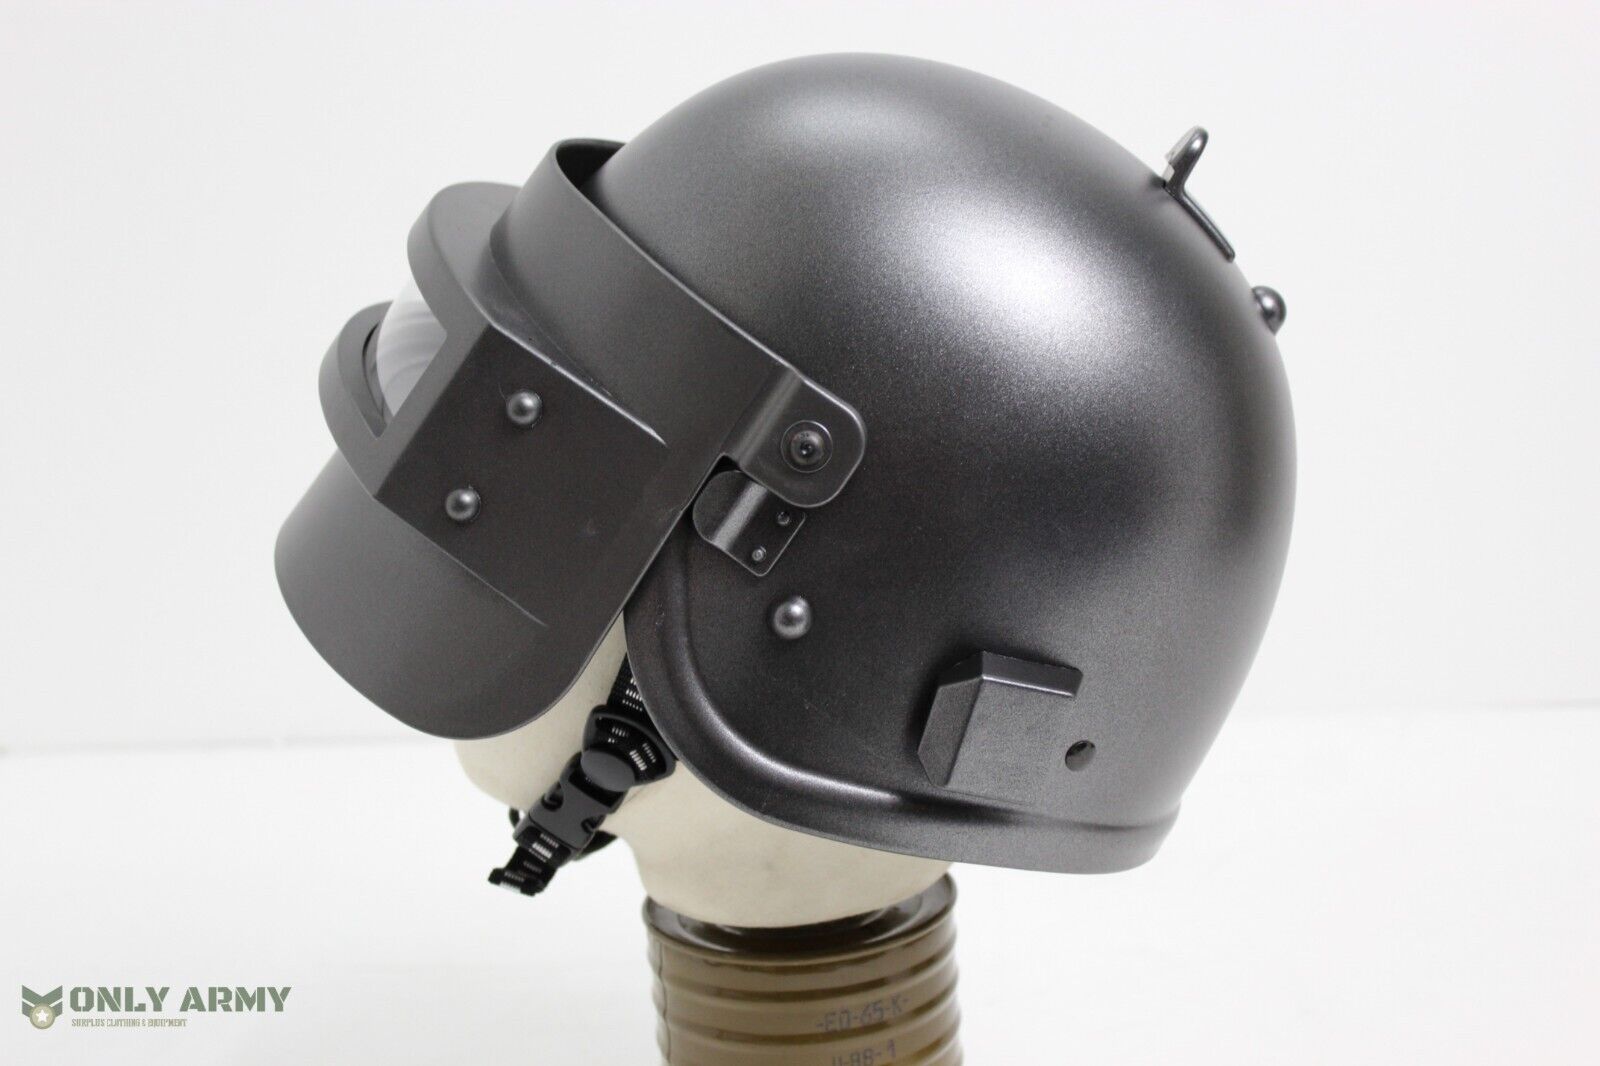 Repro Russian Army K6 Helmet K6-3 Replica Plastic Bomb Disposal Special Forces